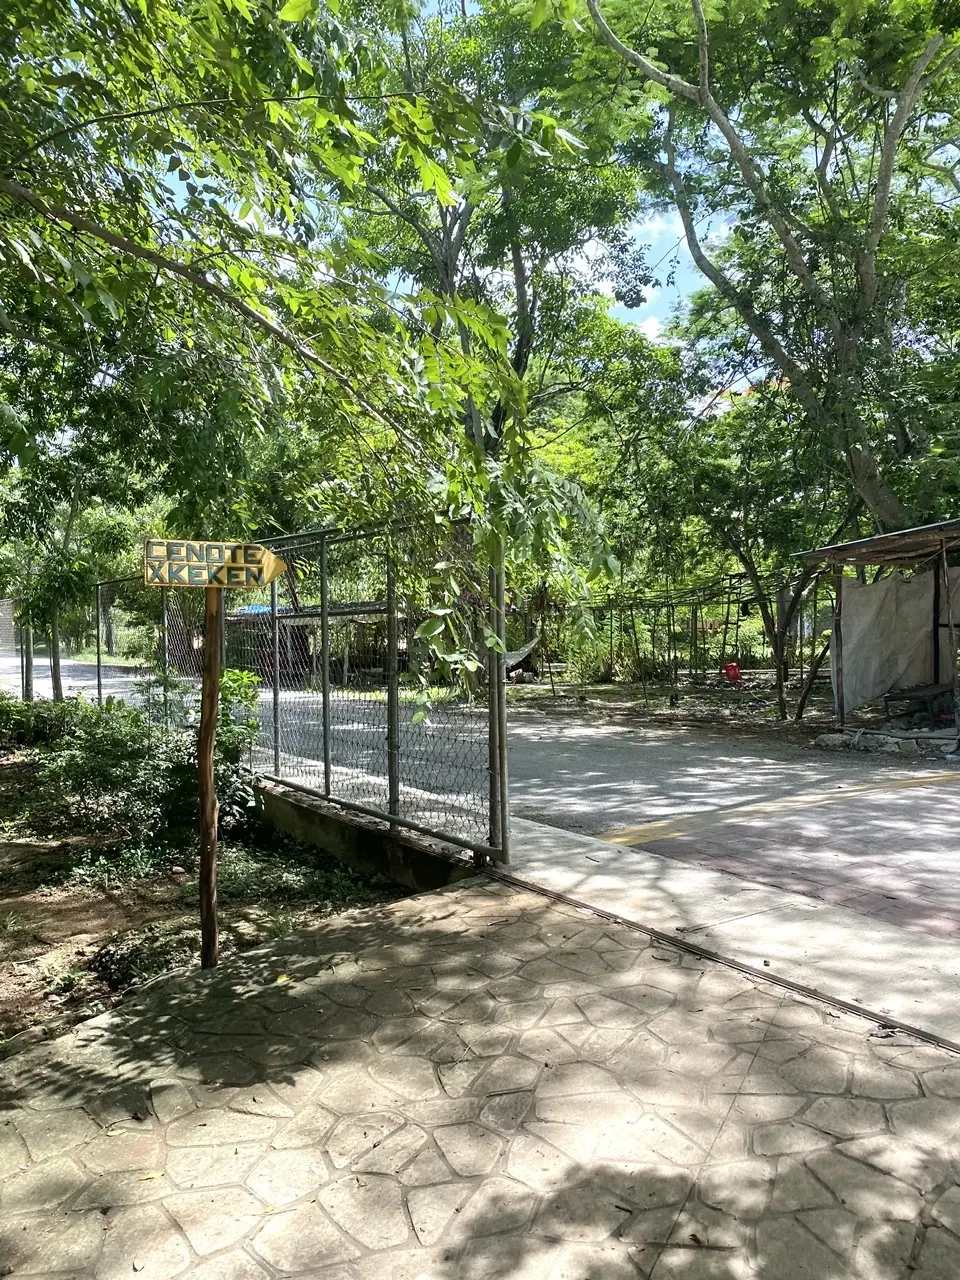 Cenote Xkeken 標識